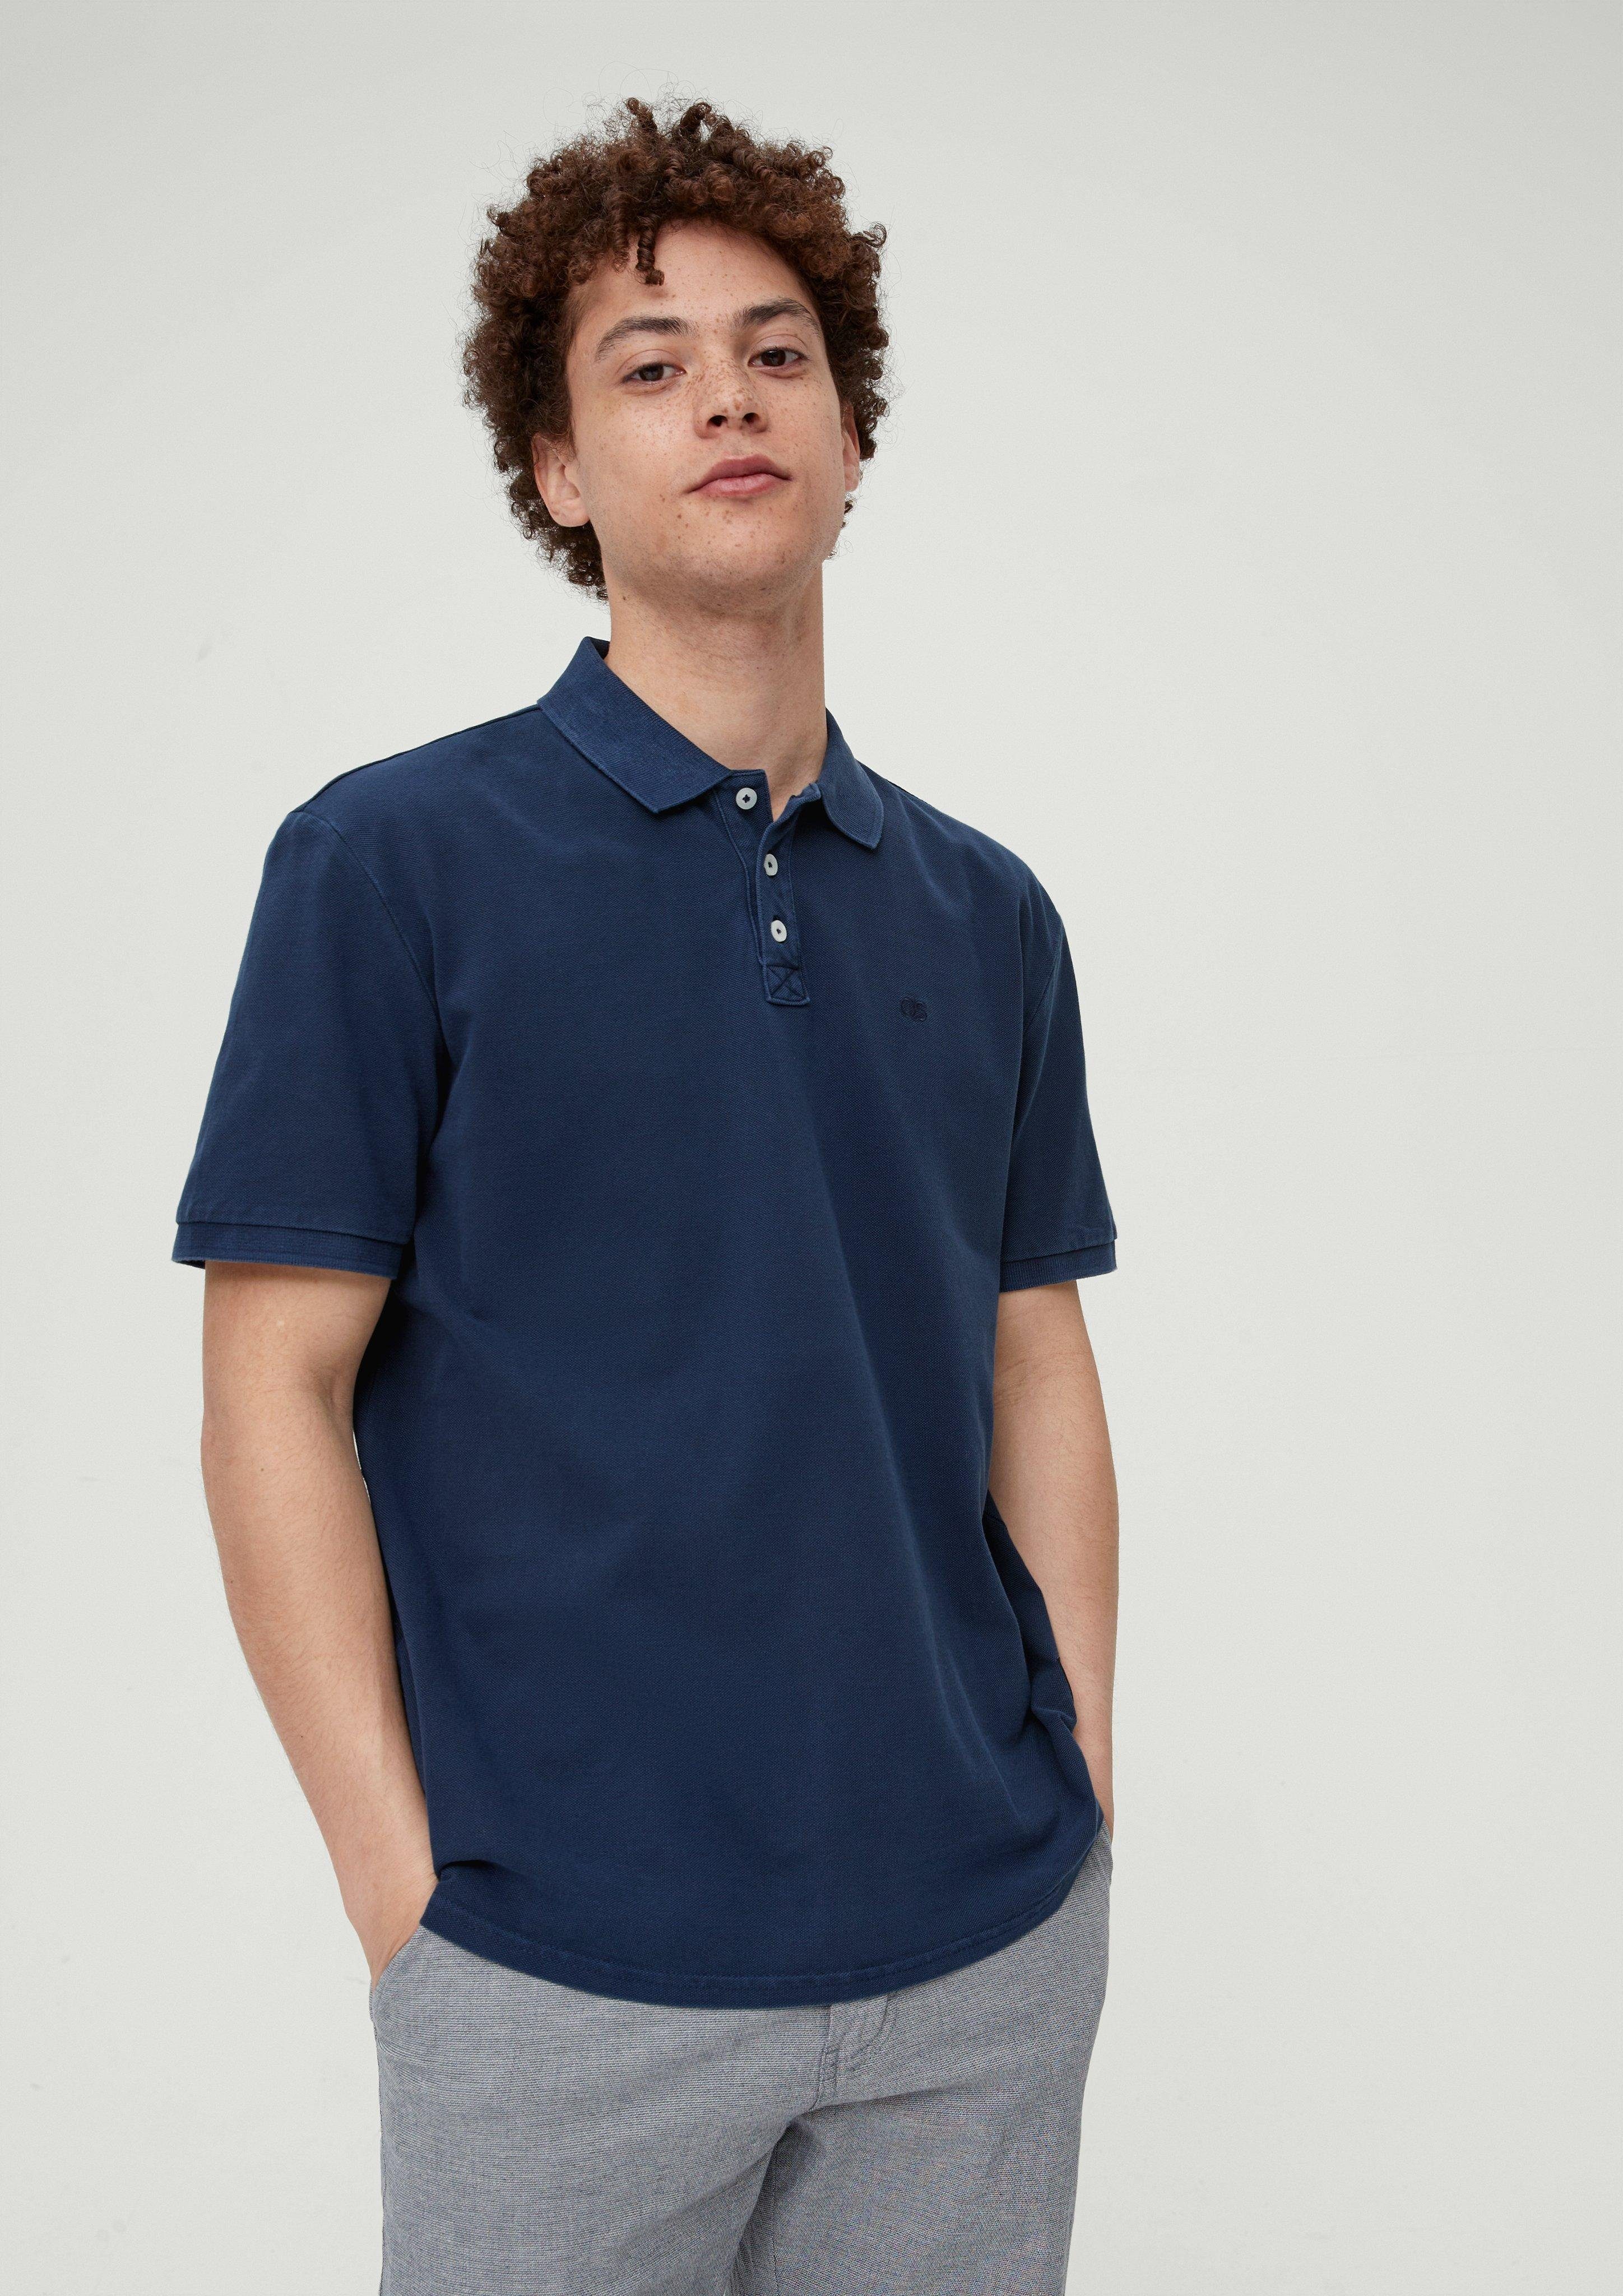 QS Poloshirt Poloshirt aus Baumwollpiqué Stickerei, Label-Patch tiefblau